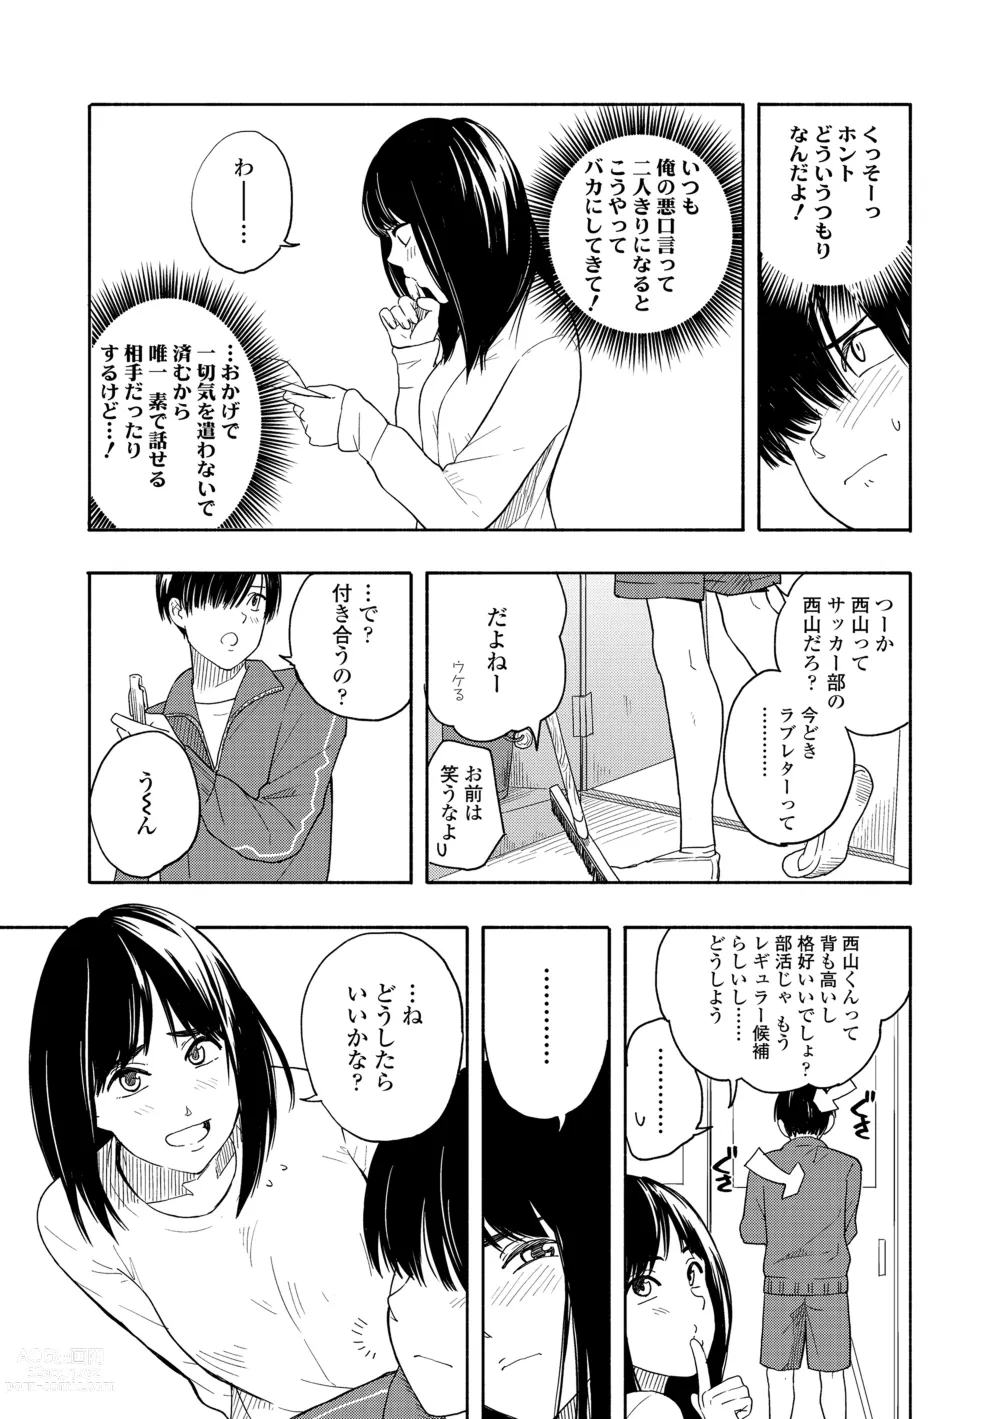 Page 29 of manga Shishunki no Eros - puberty eros + DLsite Kounyu Tokuten